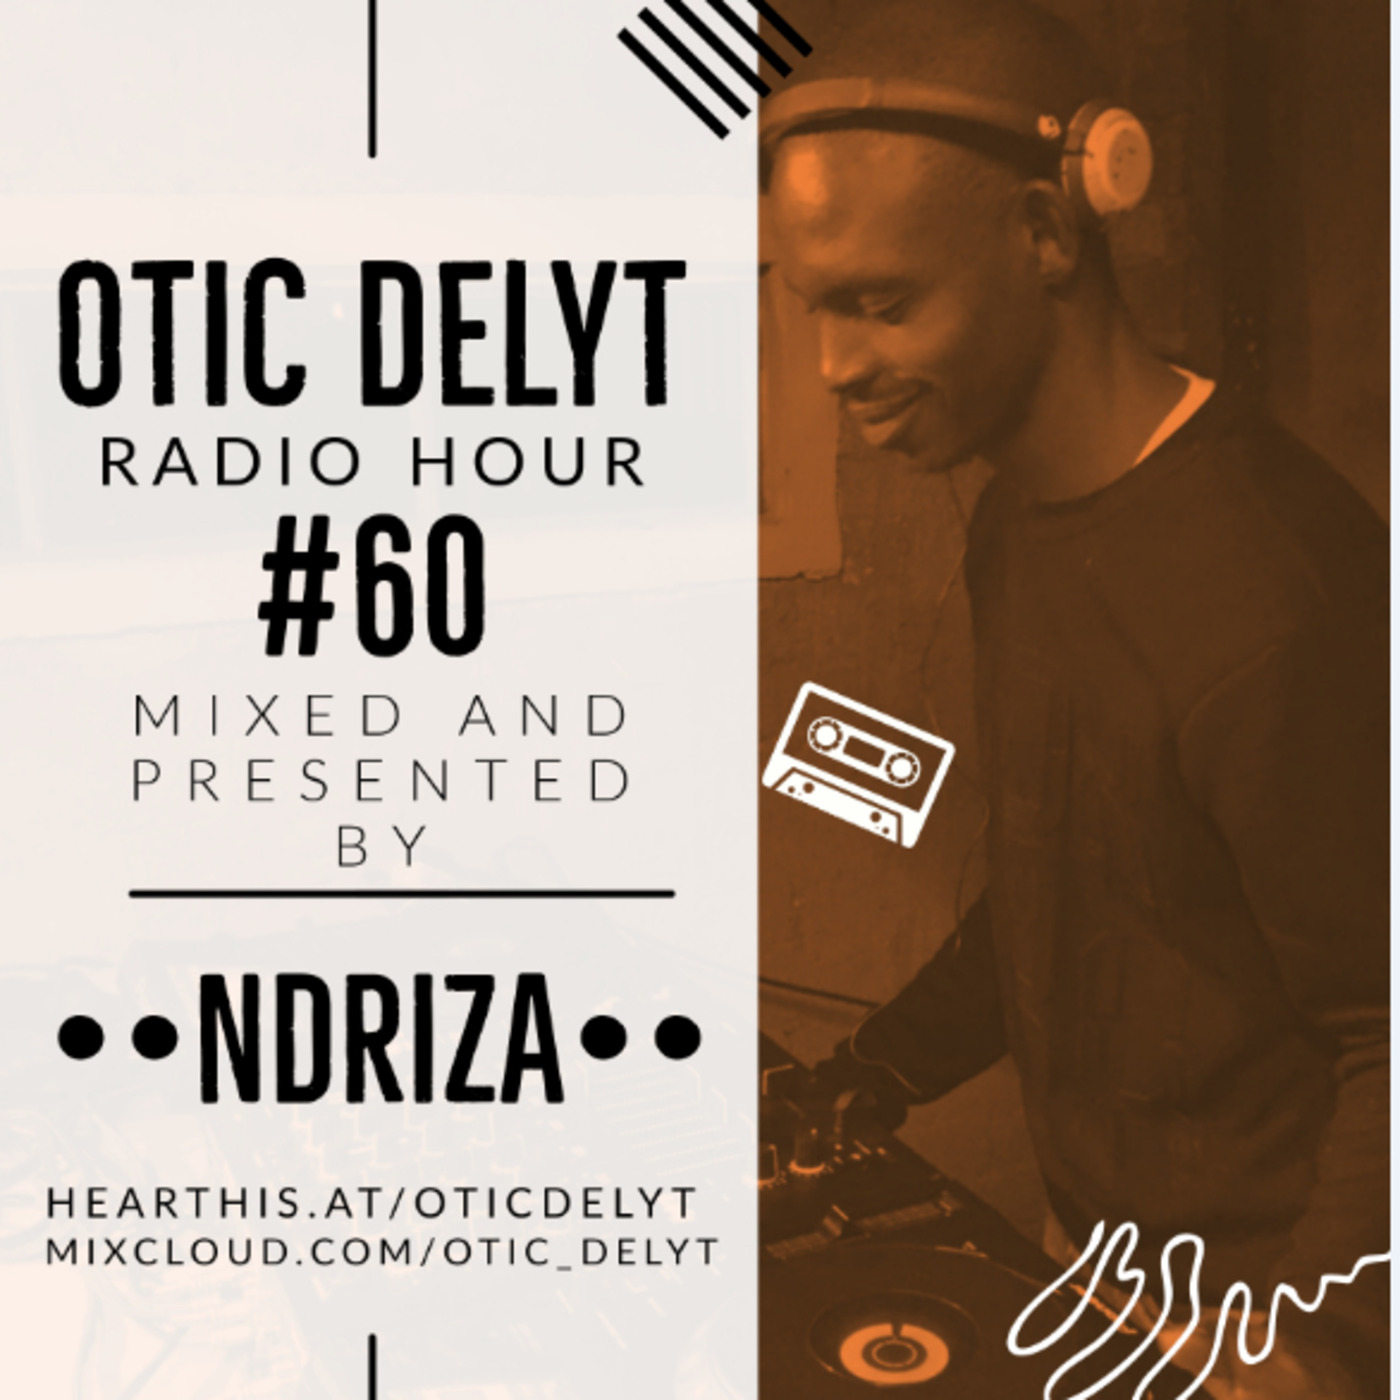 Otic Delyt Radio Hour #060 By Ndriza